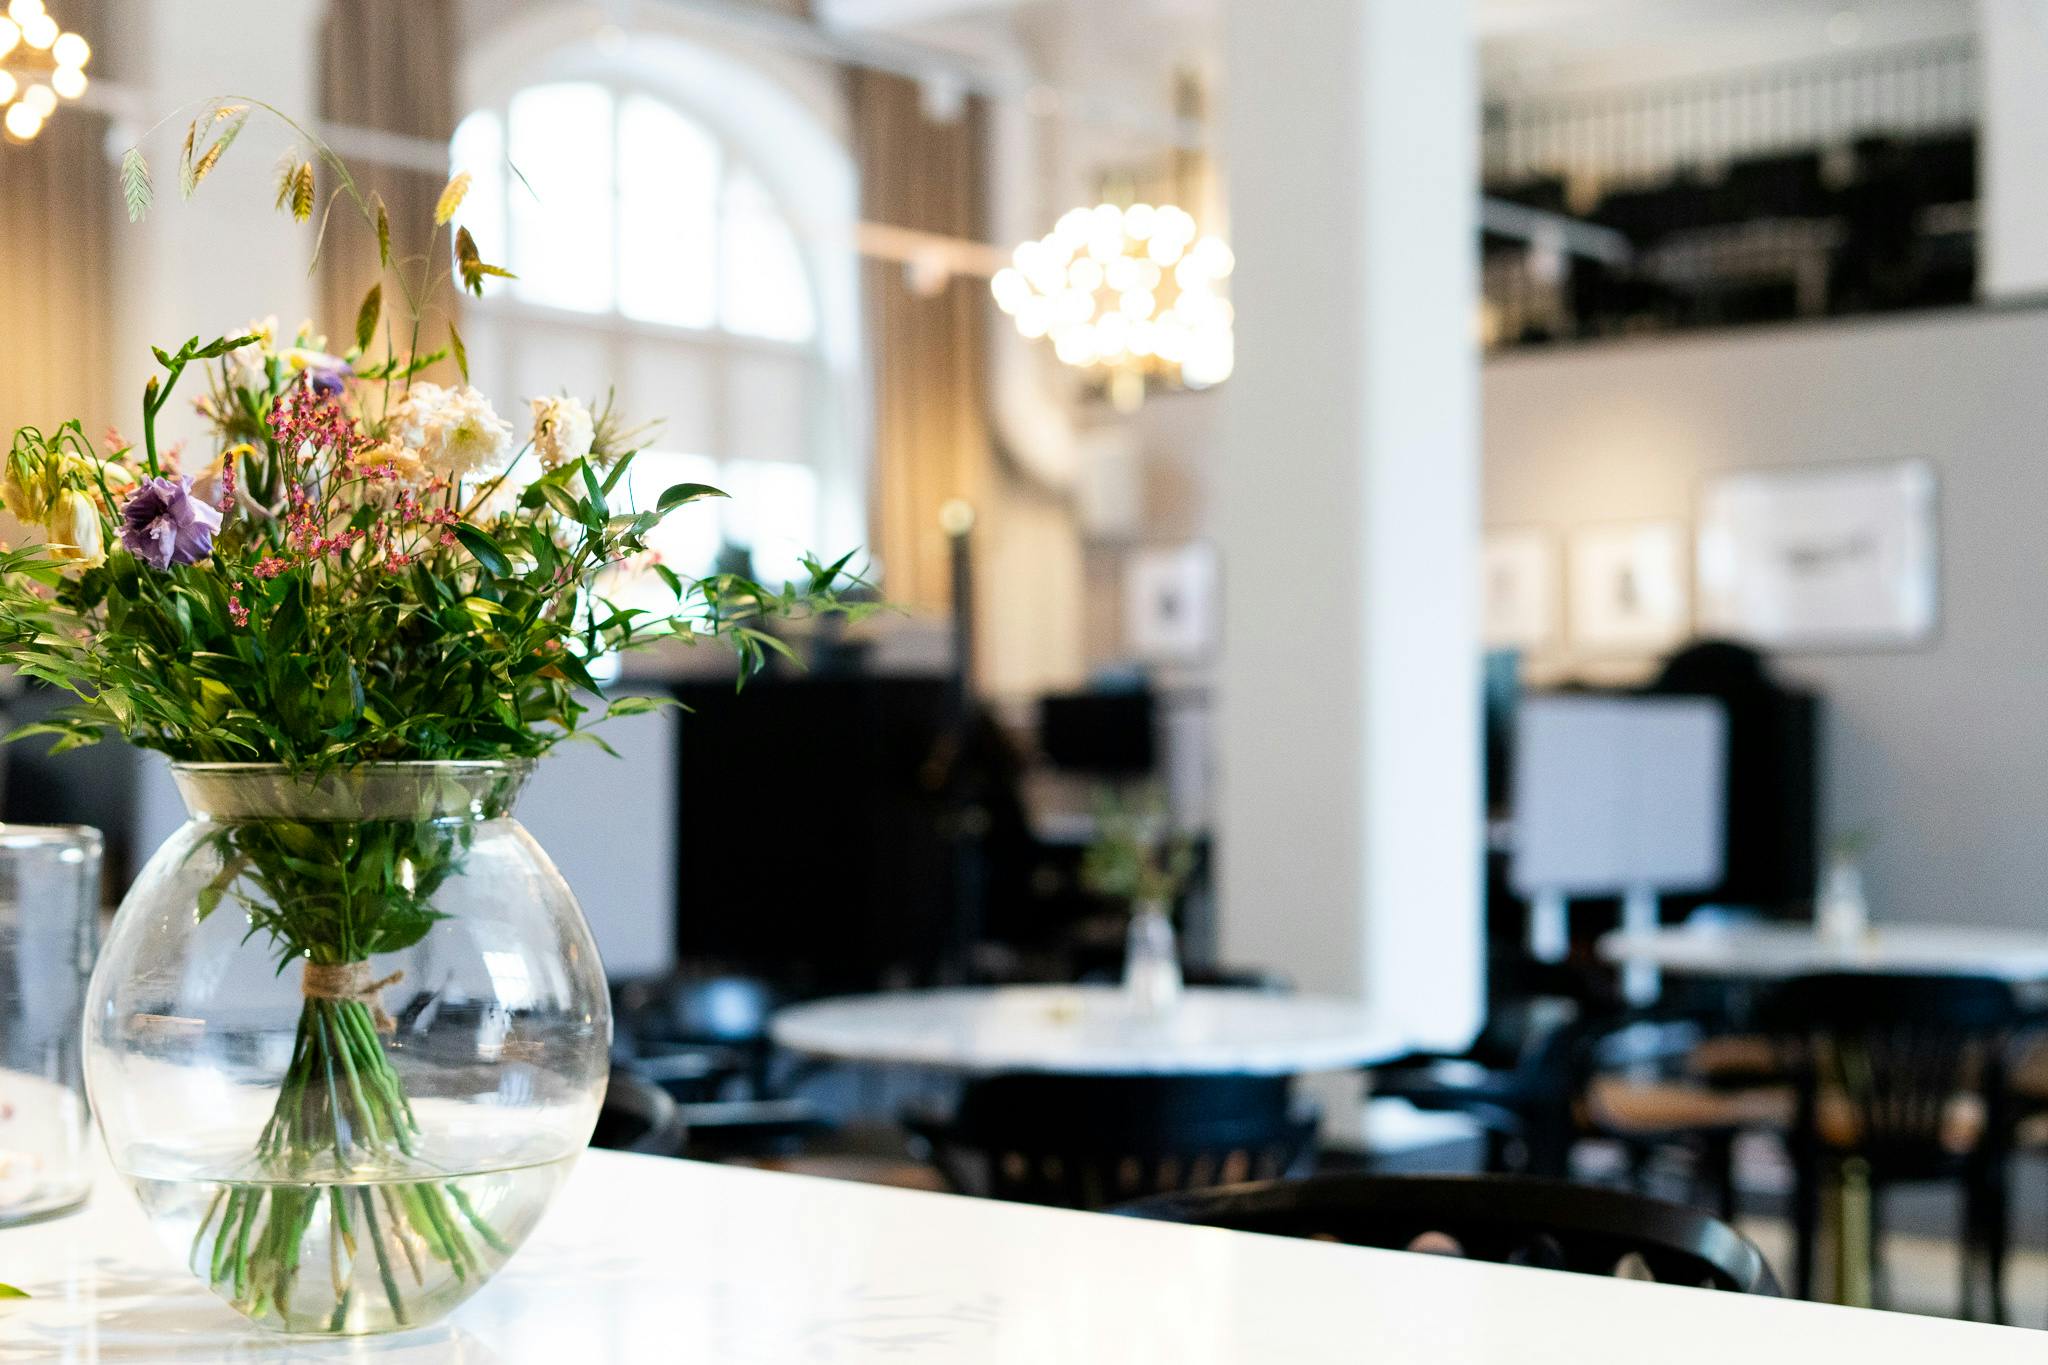 Karlstad office interior detail flower vase